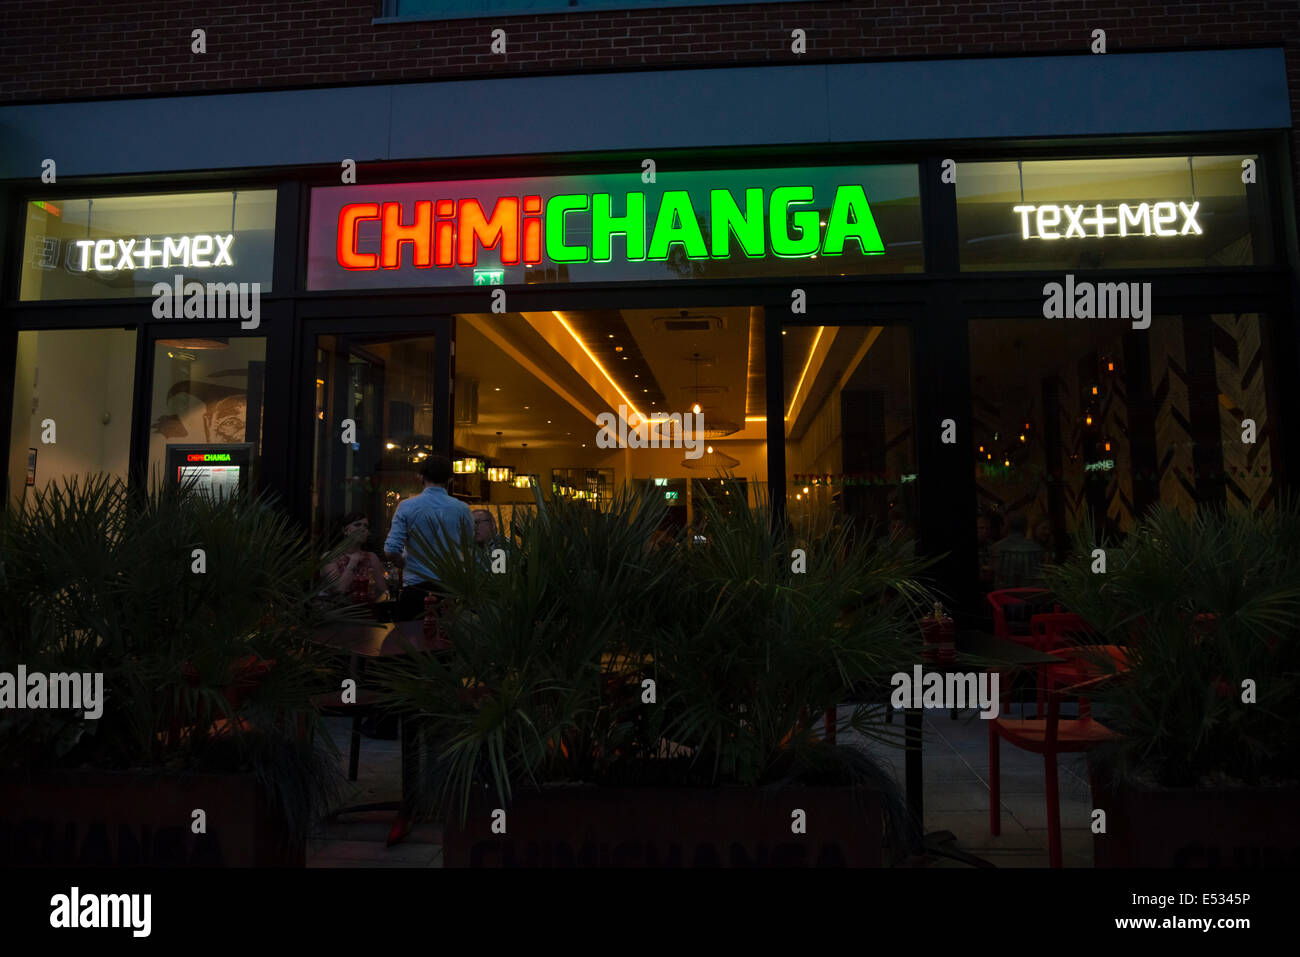 ChimiChanga ristorante di notte, UK. Foto Stock